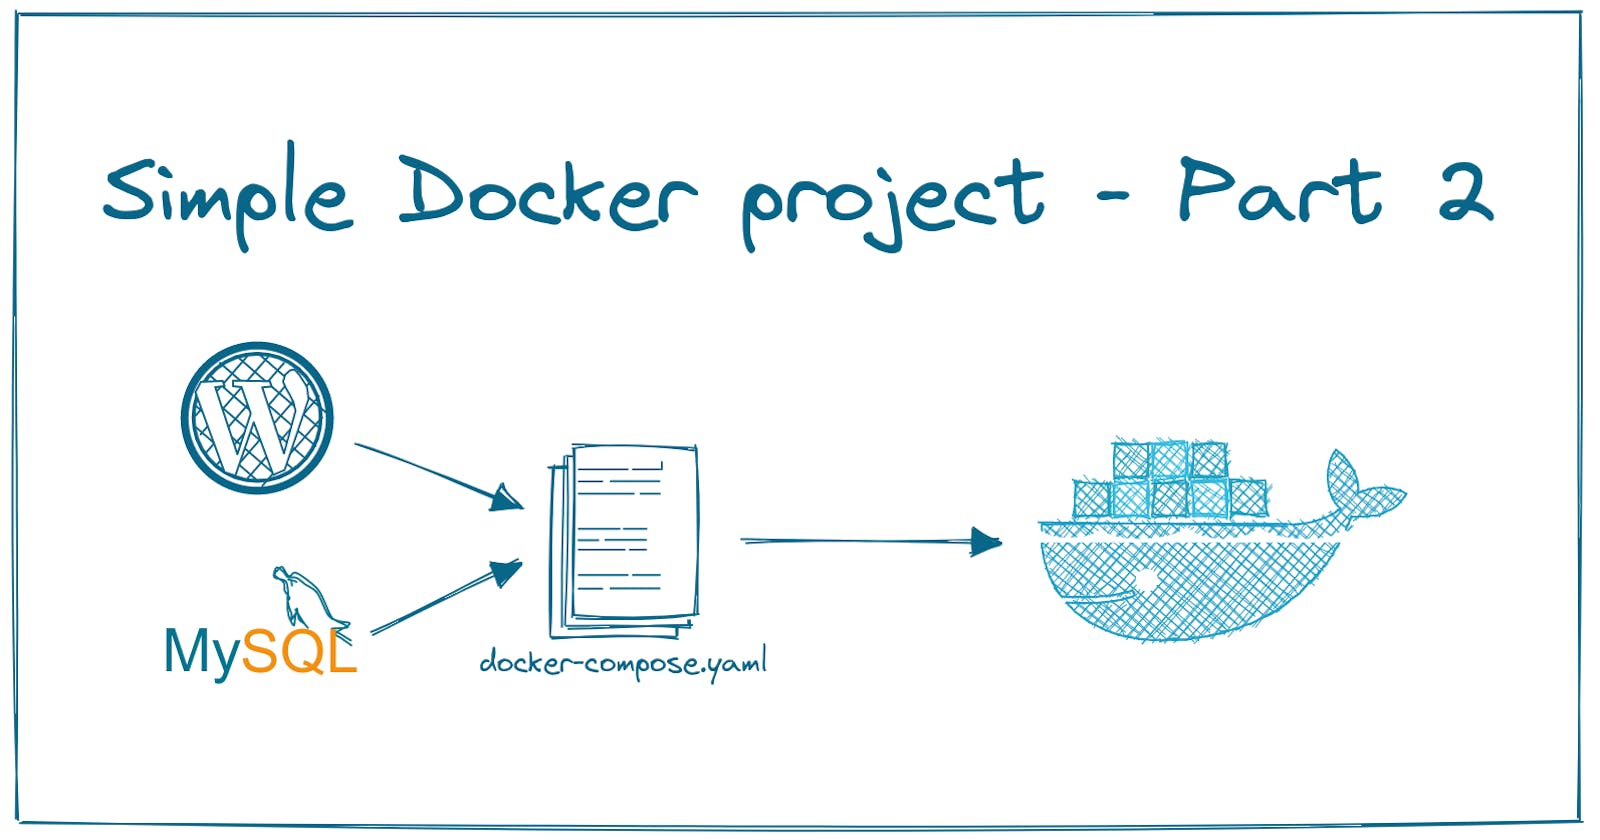 Simple Docker Project - Part 2